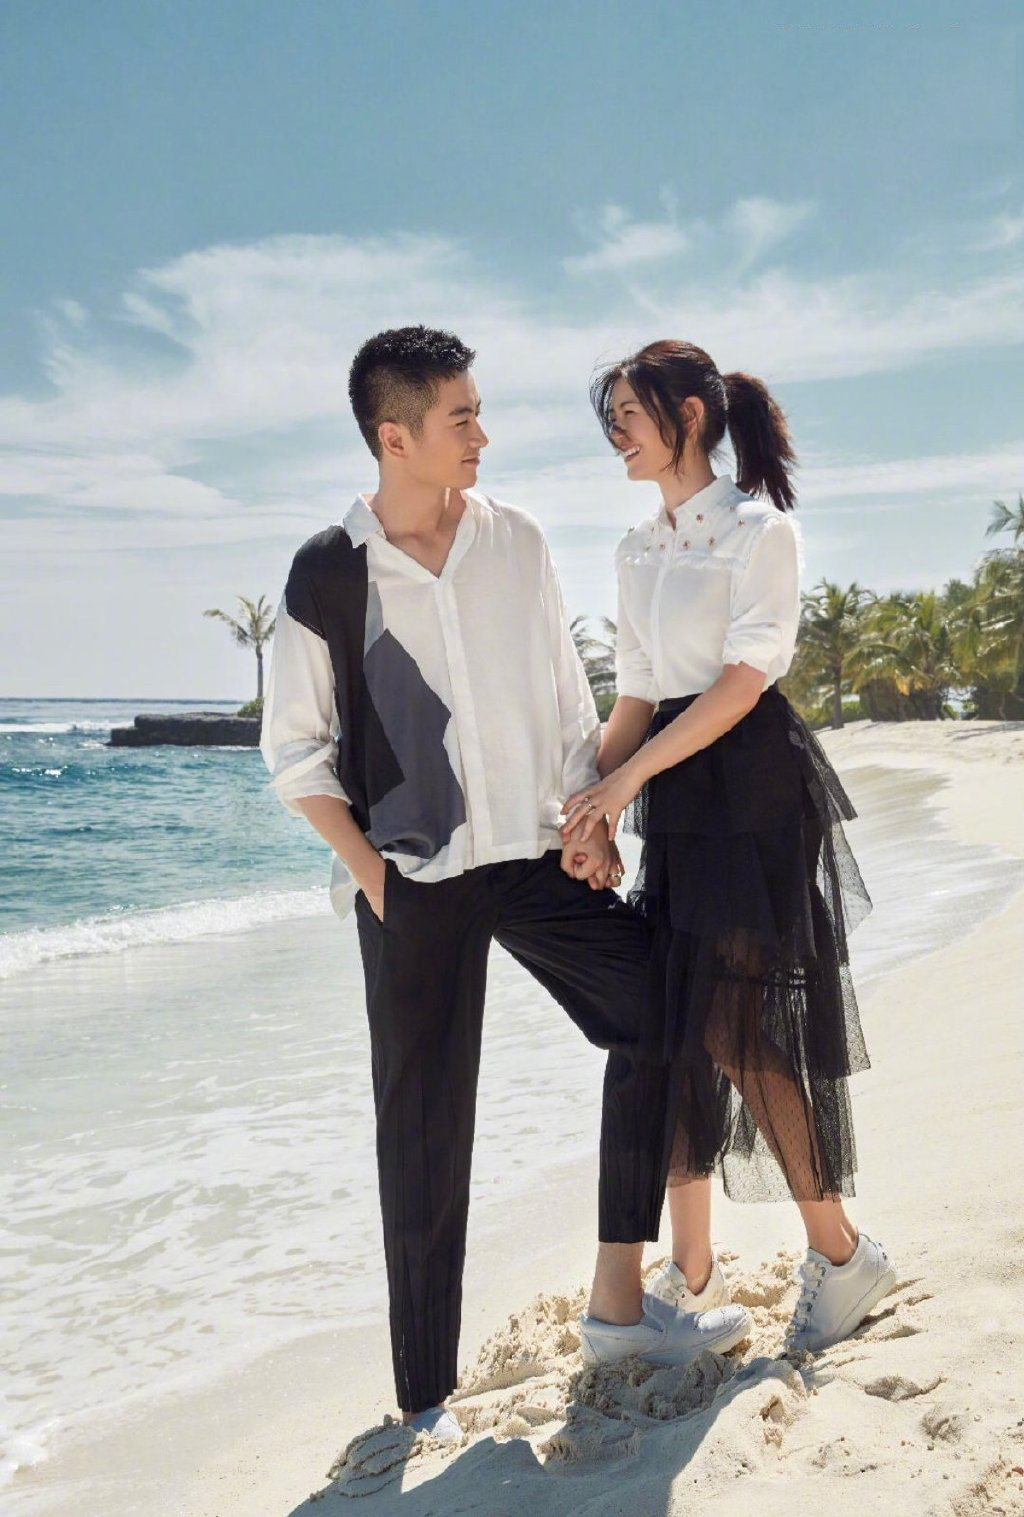 Condor Heroes actors Michelle Chen (陳妍希) and Chen Xiao (陳曉) Tie the ...